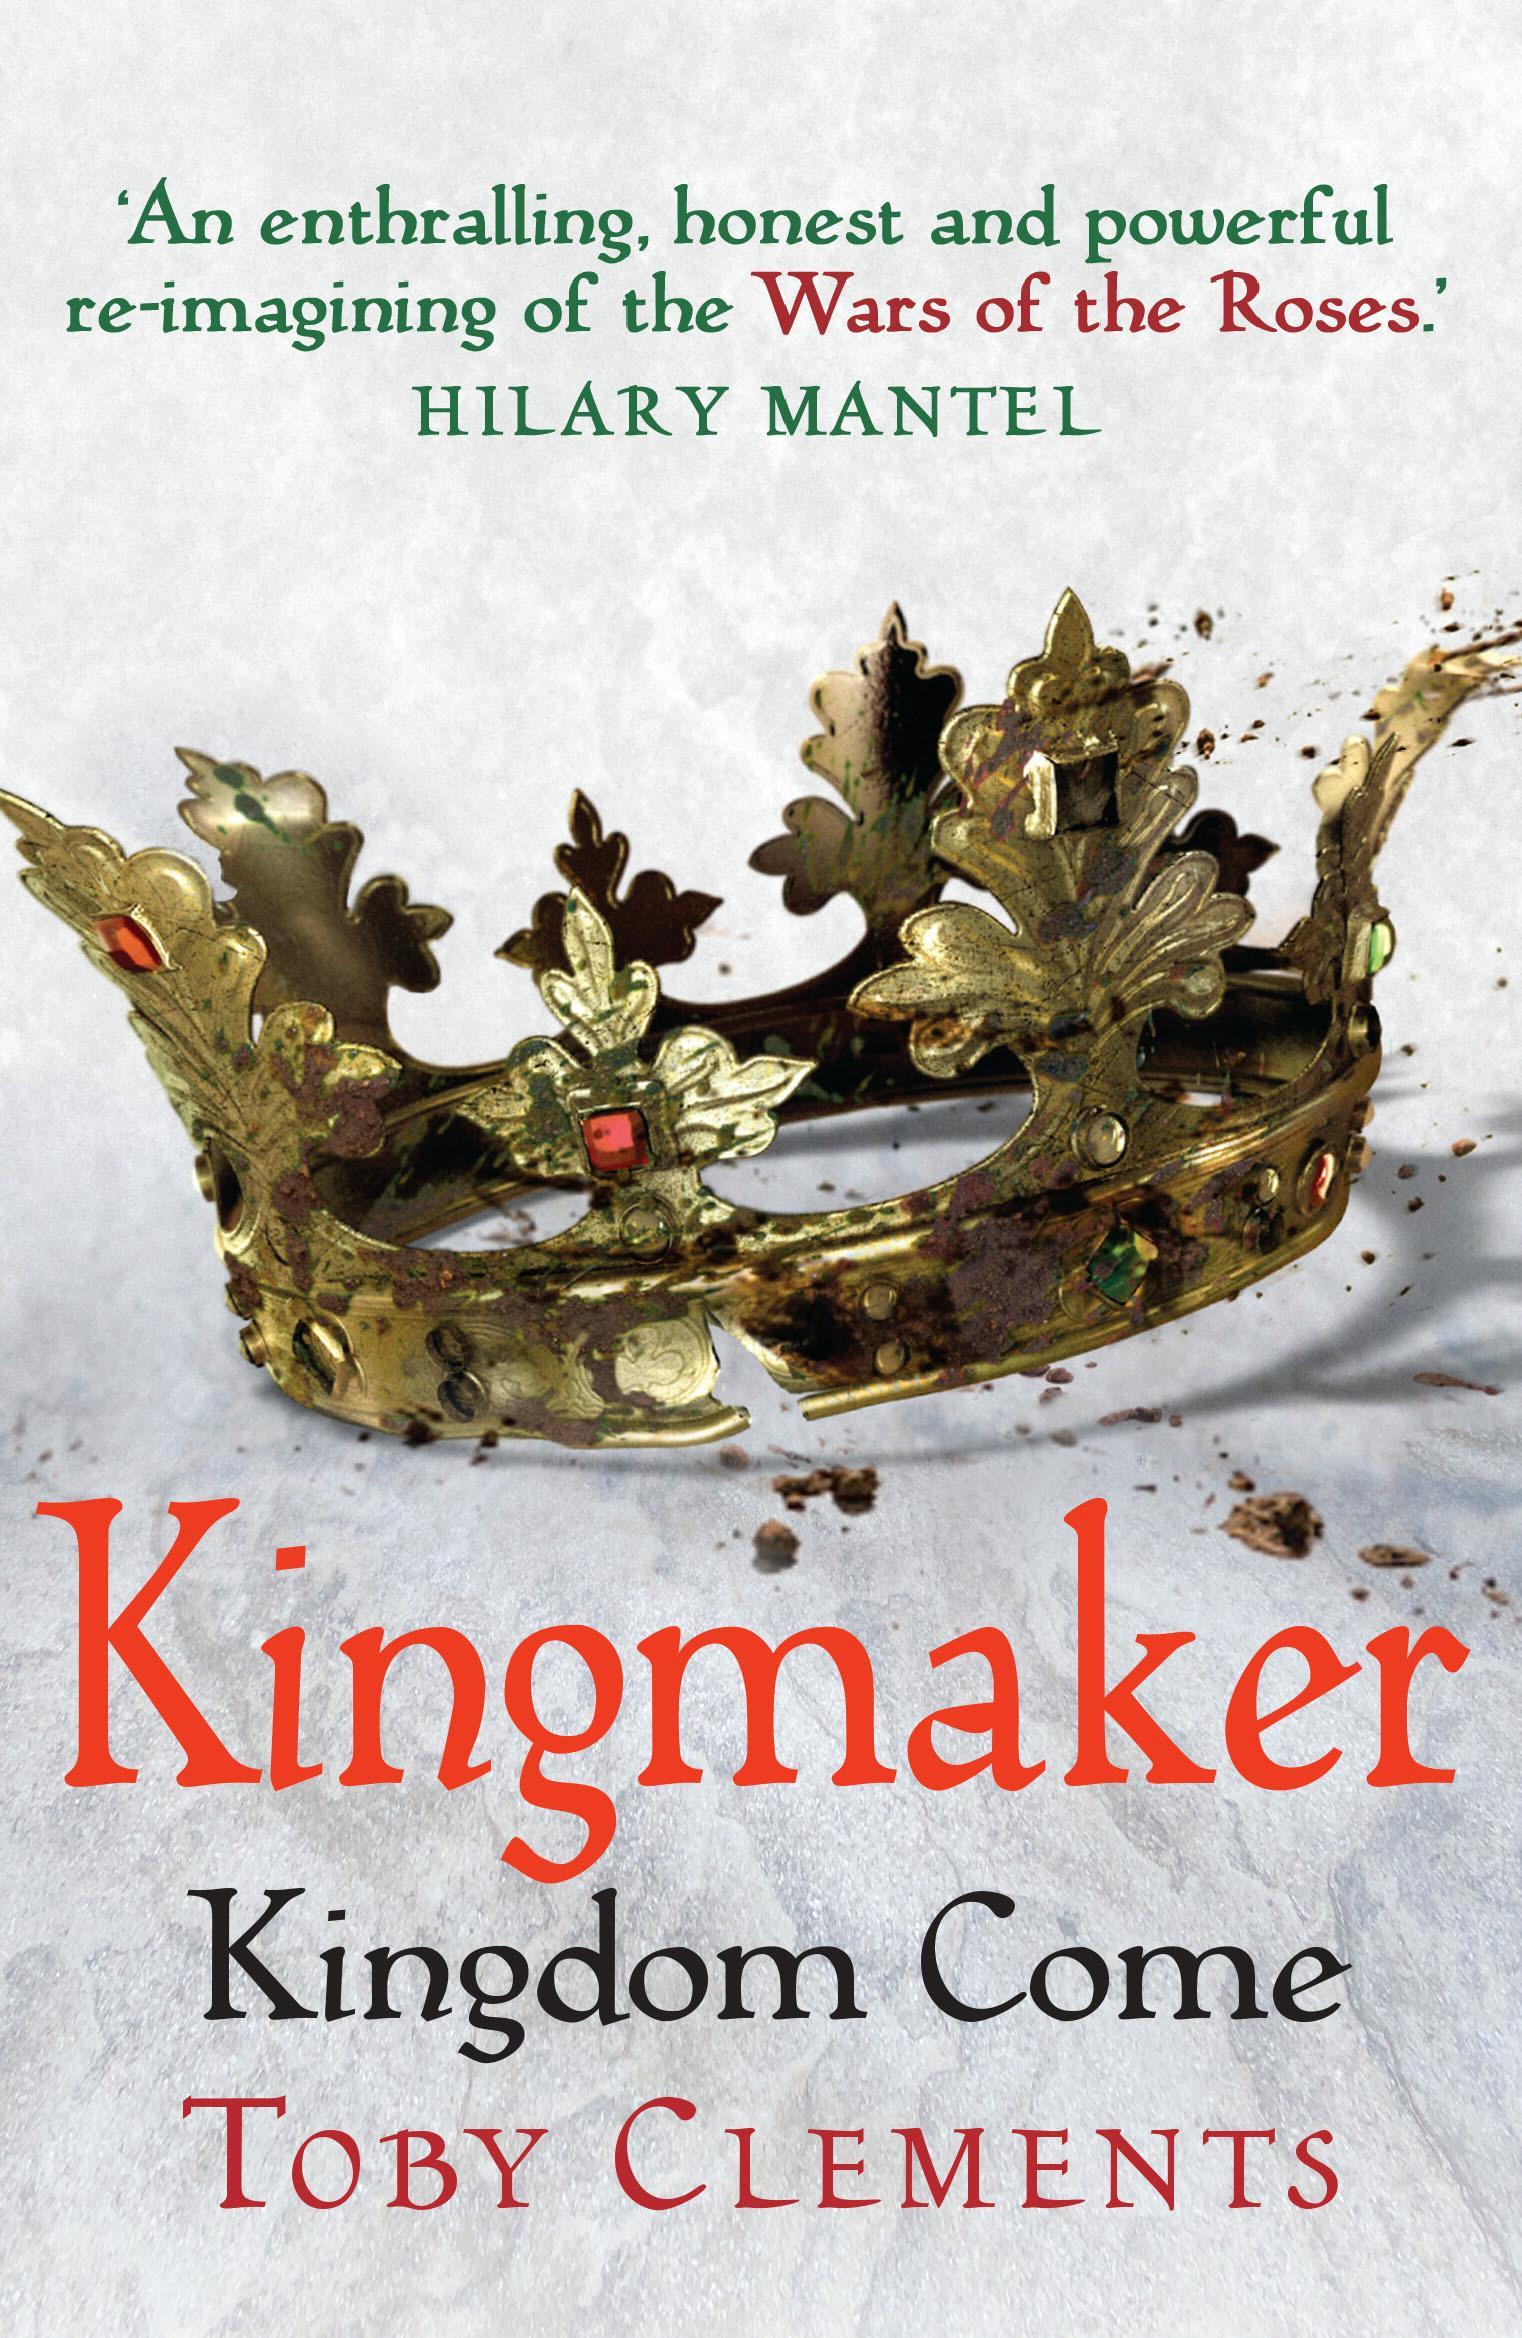 Kingmaker: Kingdom Come - Toby Clements